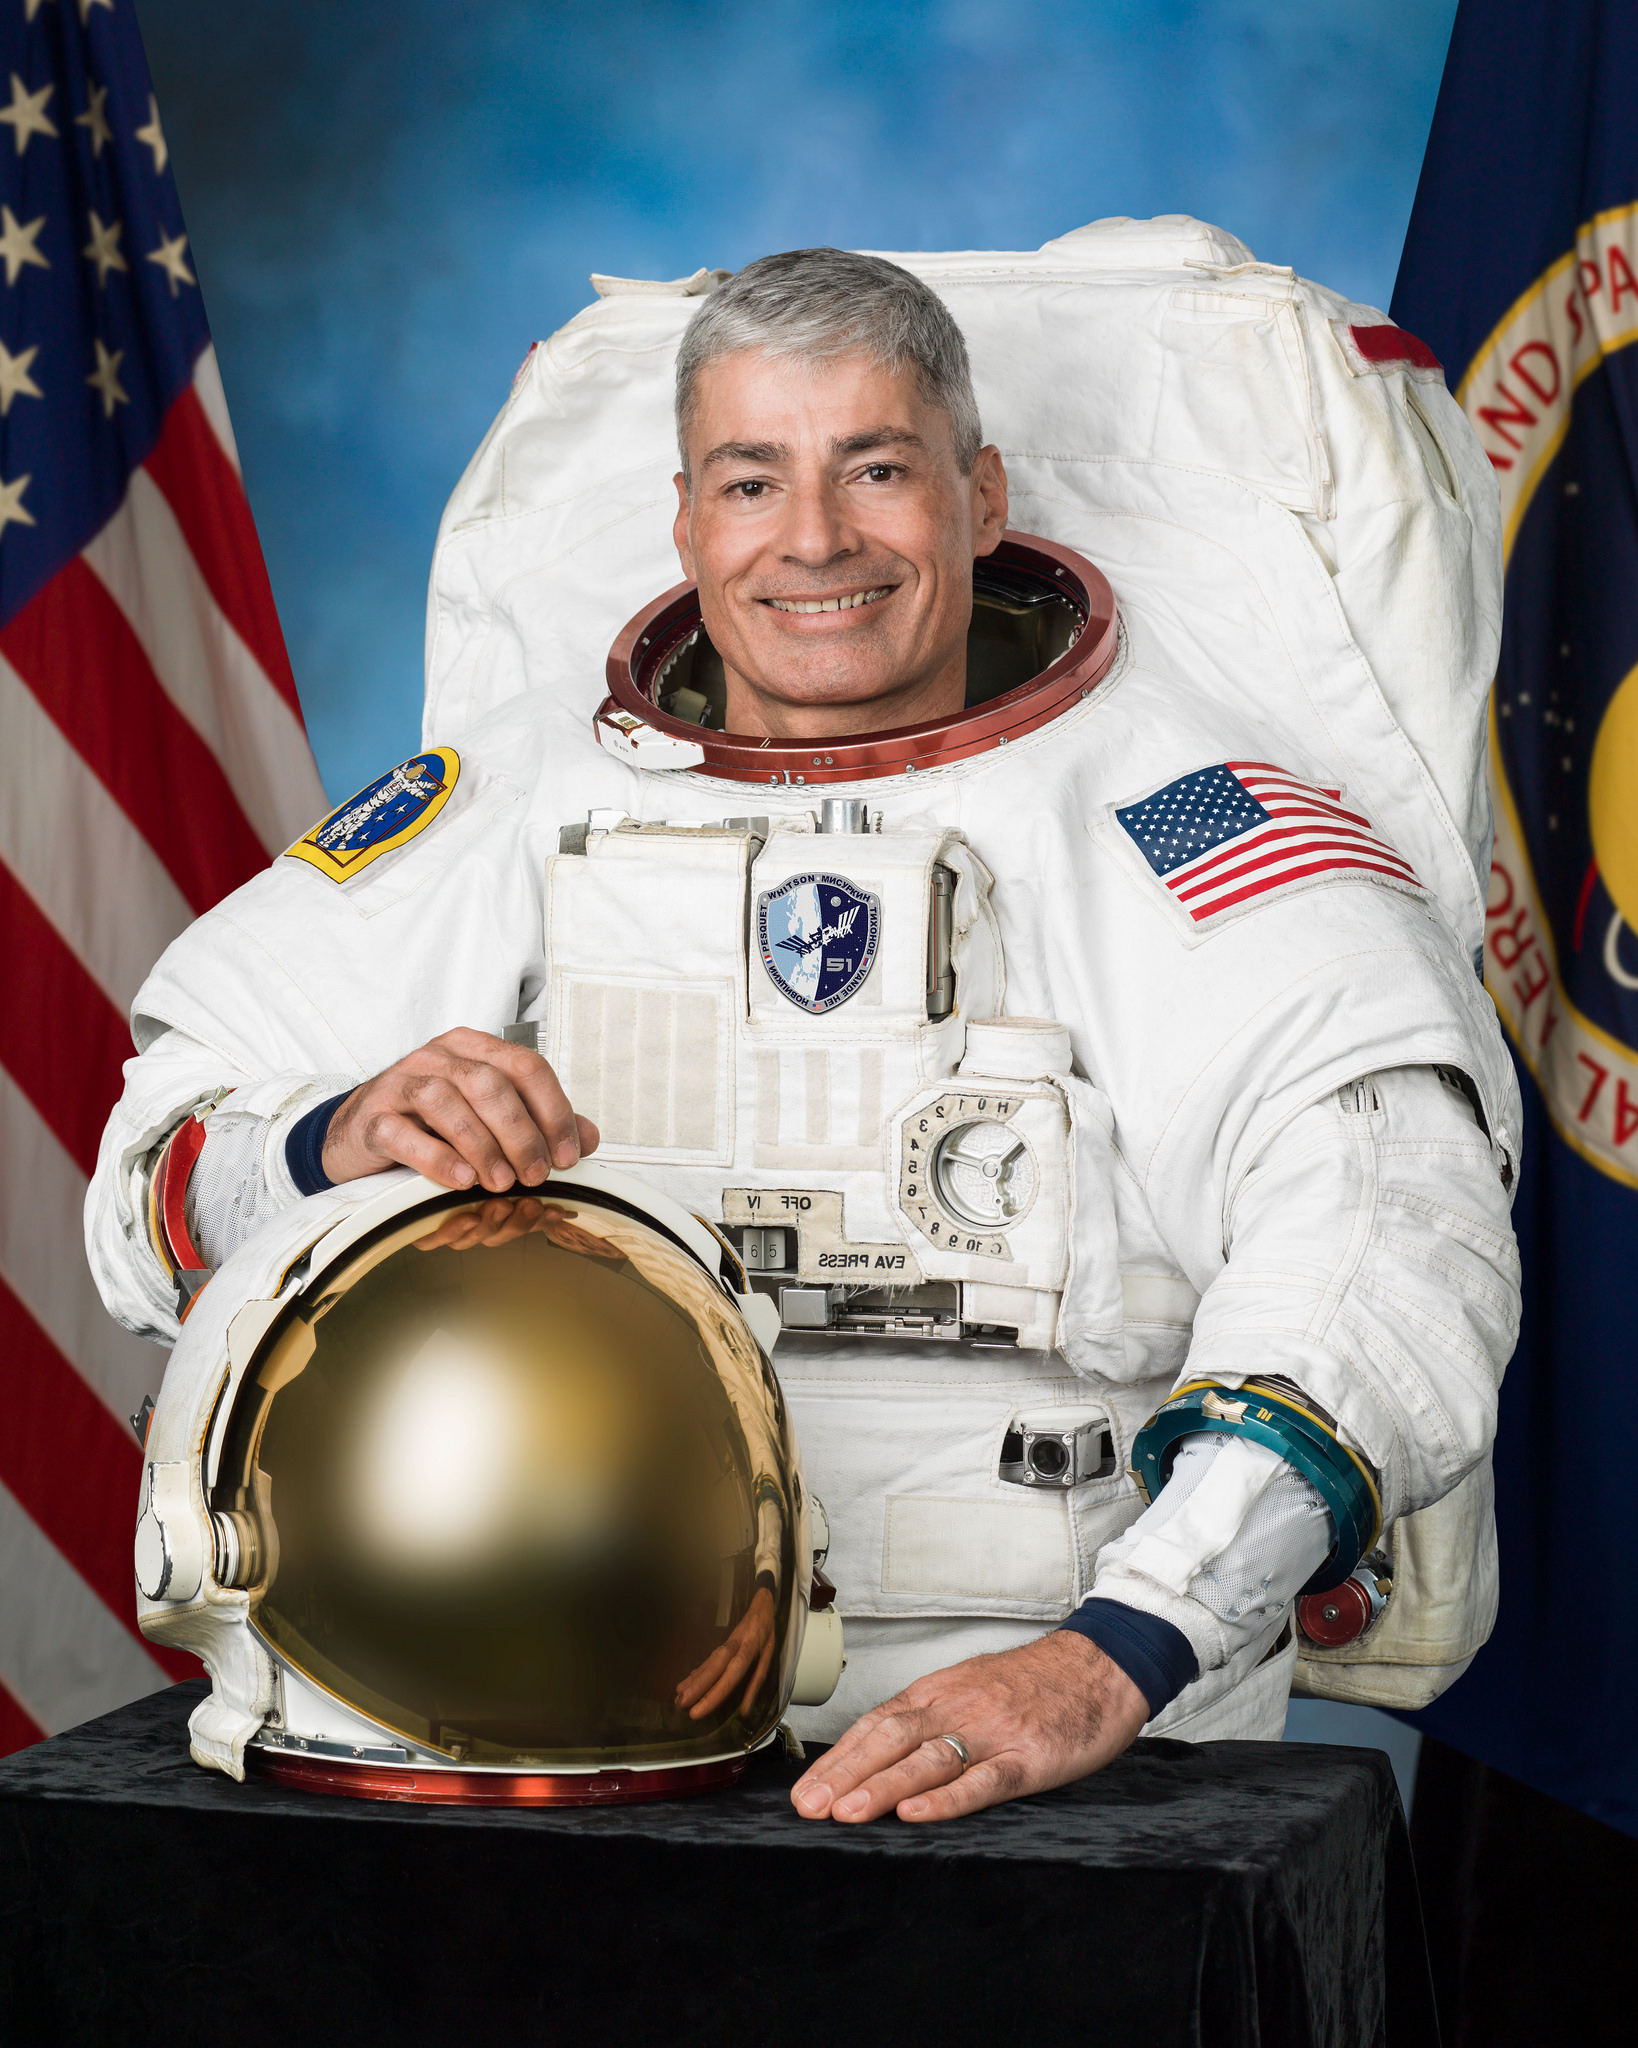 Official portrait of Expedition 54 astronaut Mark Vande Hei